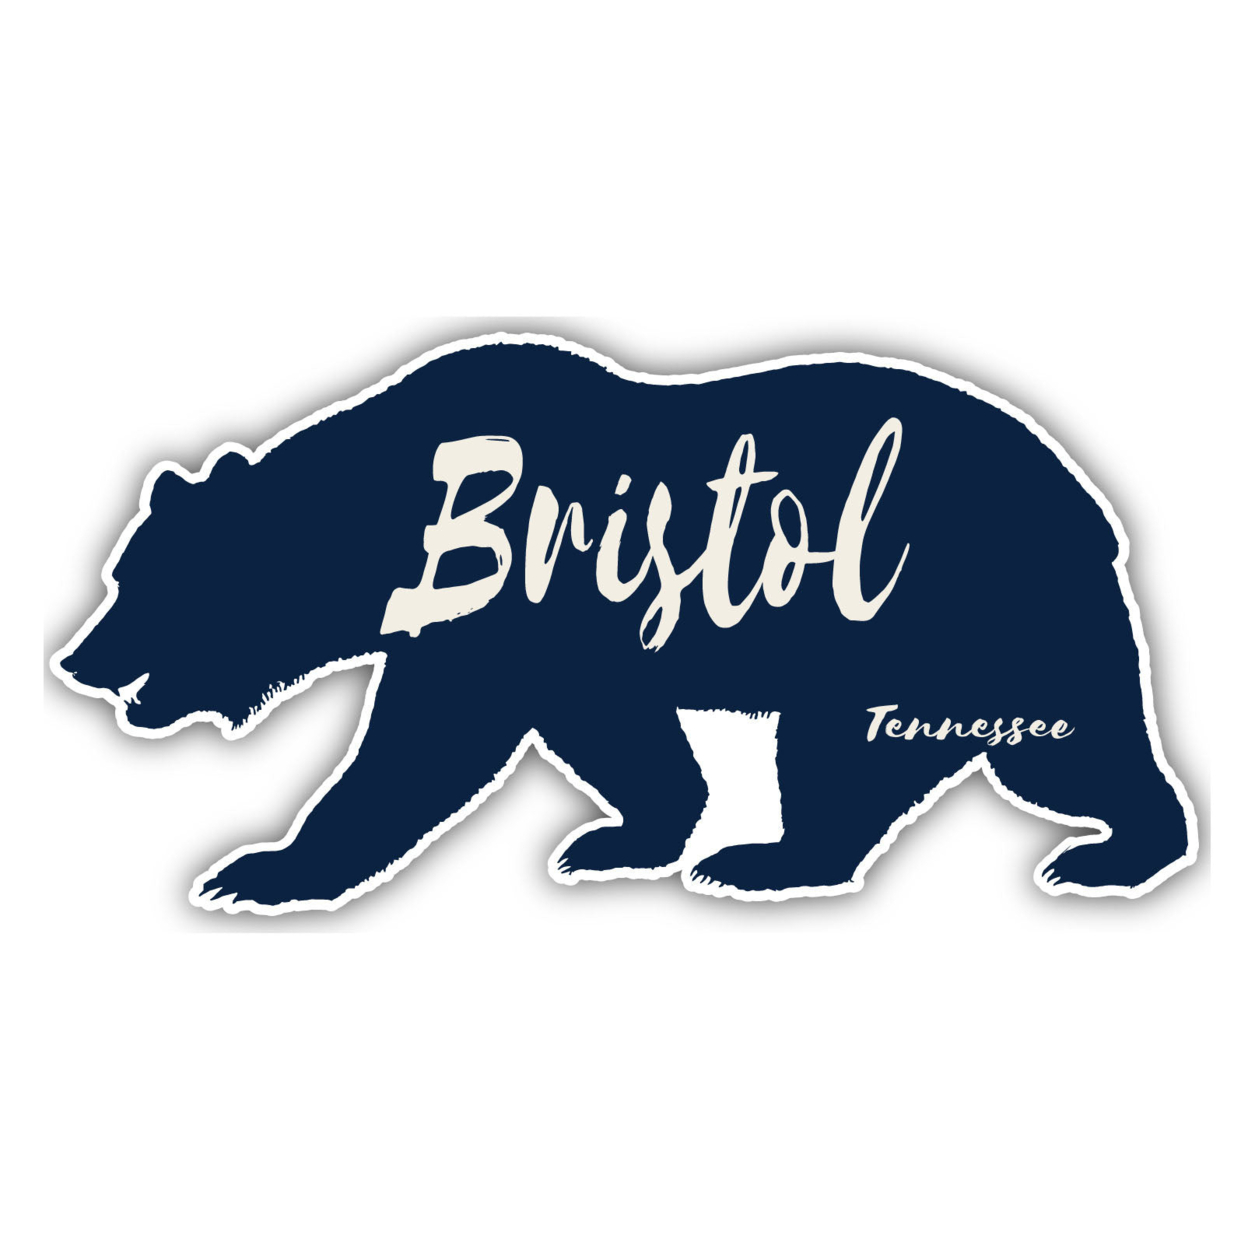 Bristol Tennessee Souvenir Decorative Stickers (Choose Theme And Size) - Single Unit, 4-Inch, Bear